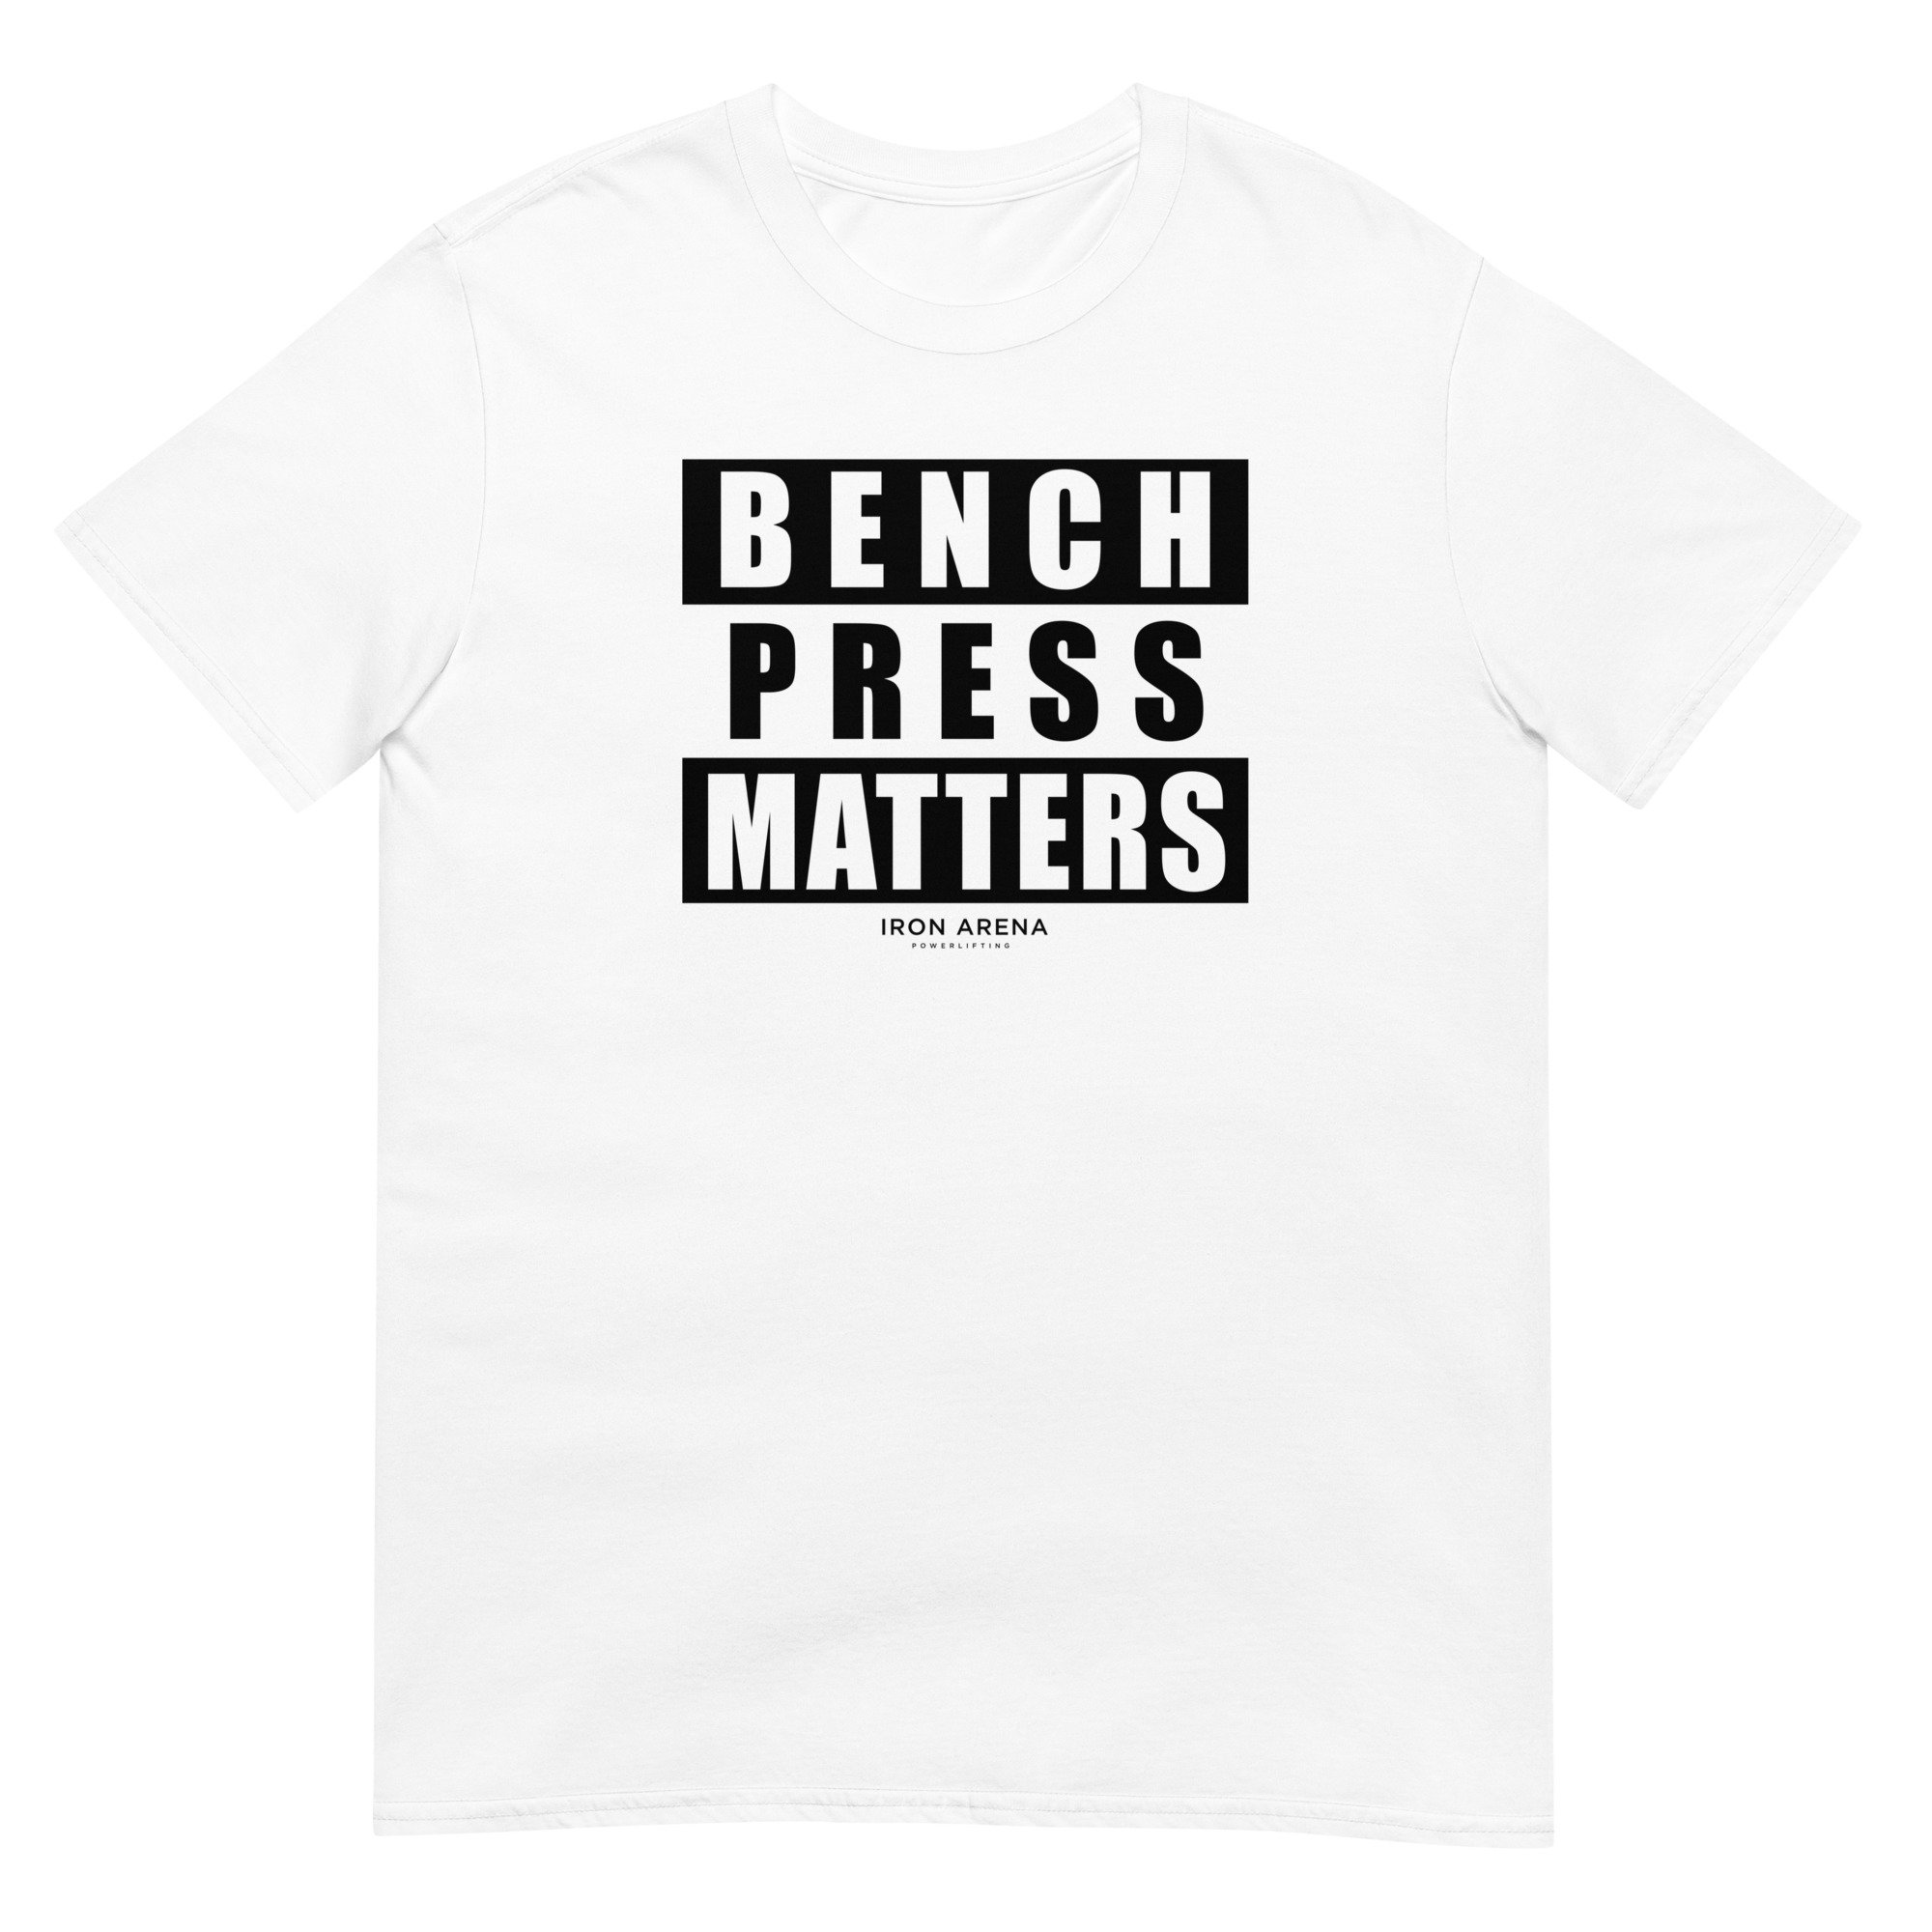 Performance & Bench — Matters Iron Press Arena Powerlifting S-3XL) (White